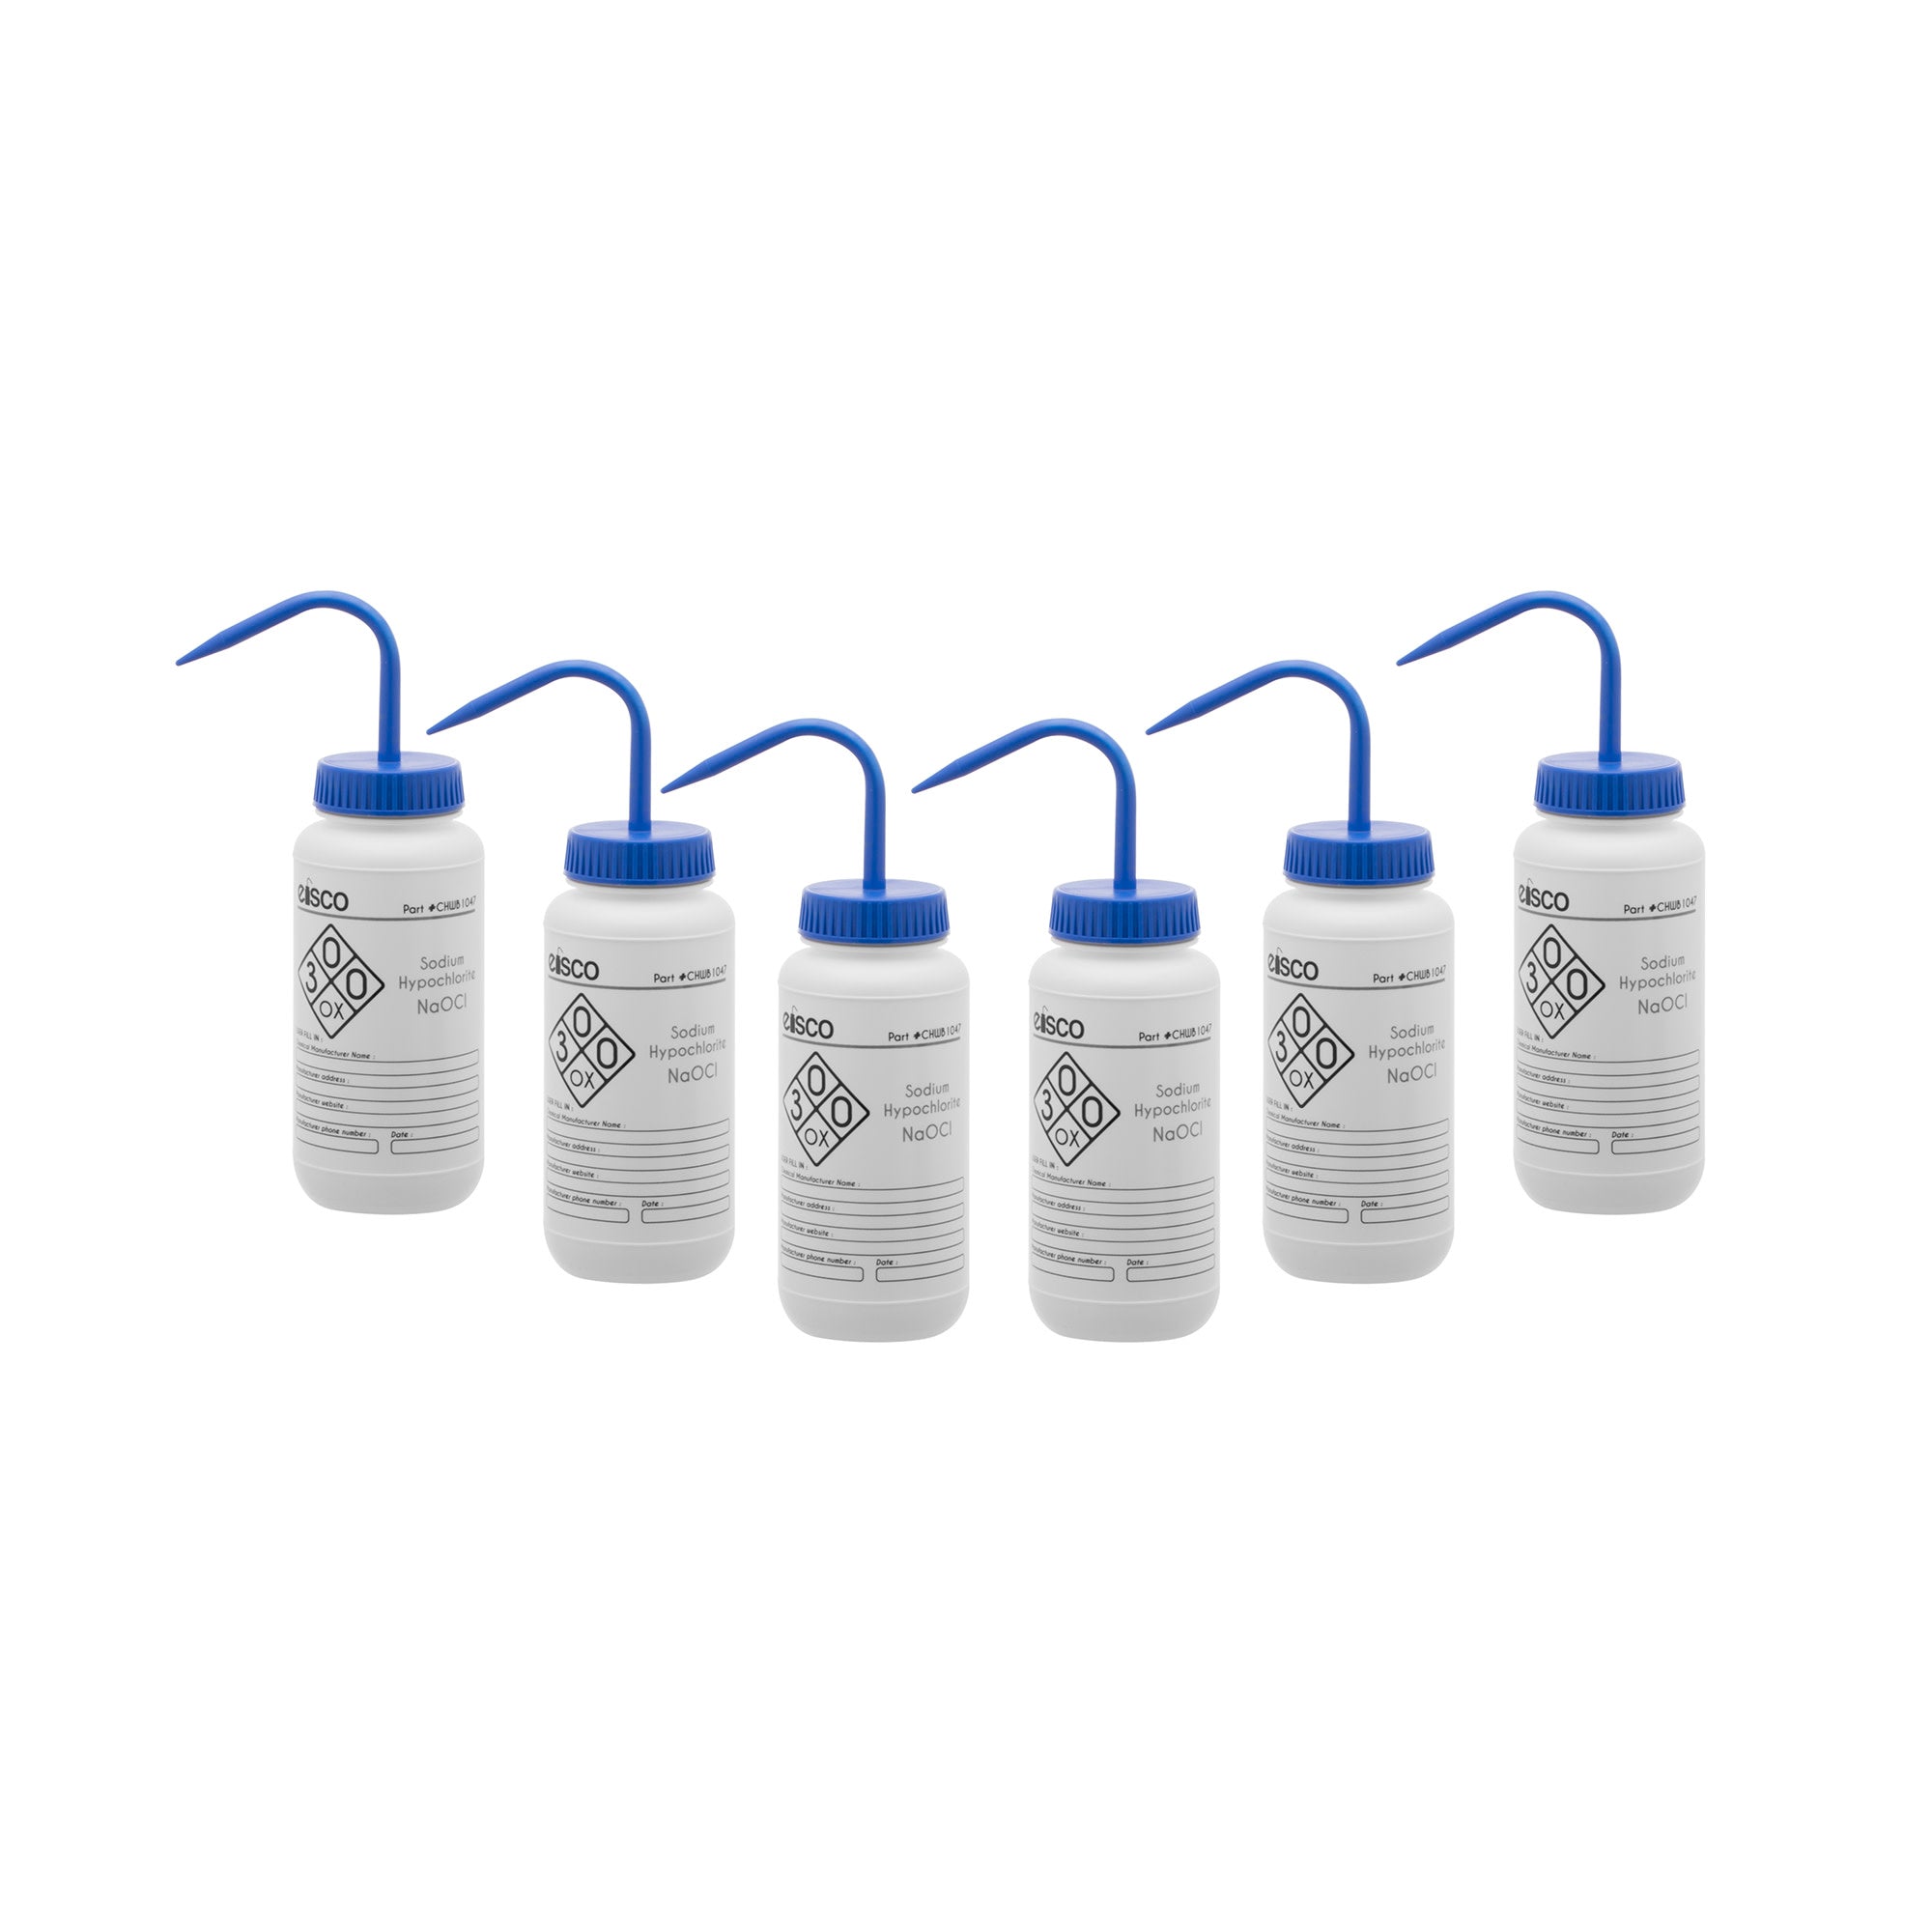 6PK Performance Plastic Wash Bottle, Sodium Hypochlorite (Bleach), 500 ml - Labeled (2 Color)